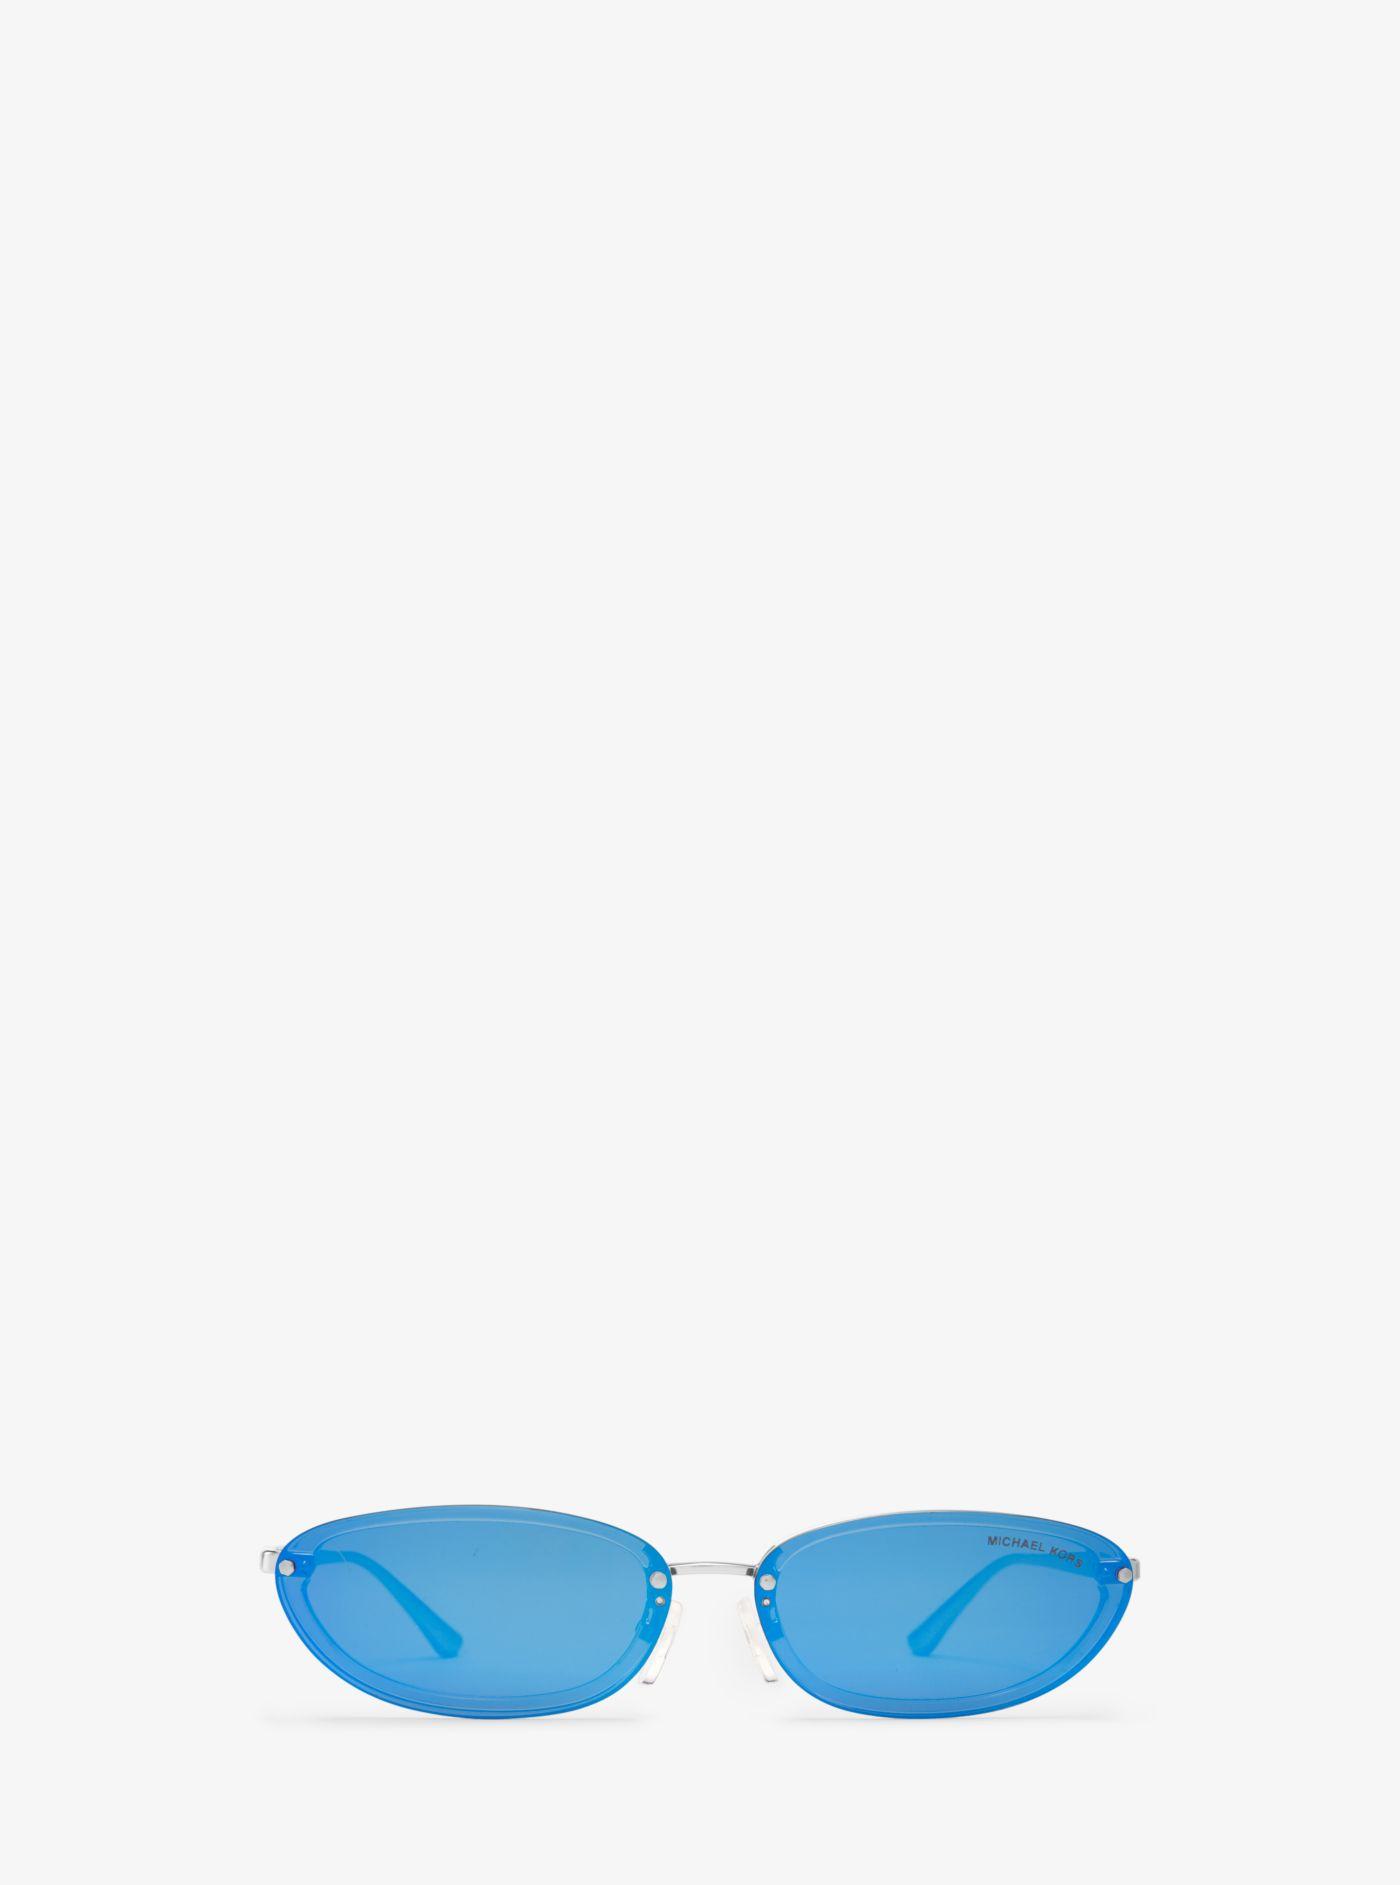 Michael Kors Mk2104 Miramar 357825 Sunglasses in Silver (Blue) for Men -  Save 44% - Lyst